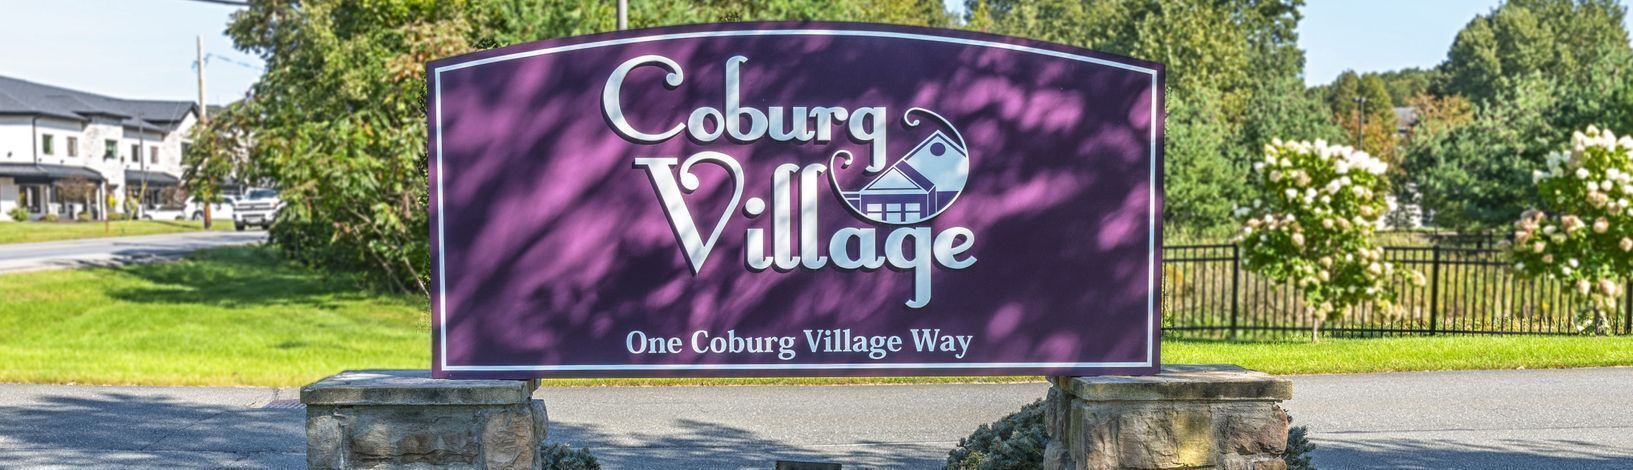 Coburg Village Grooms Road sign